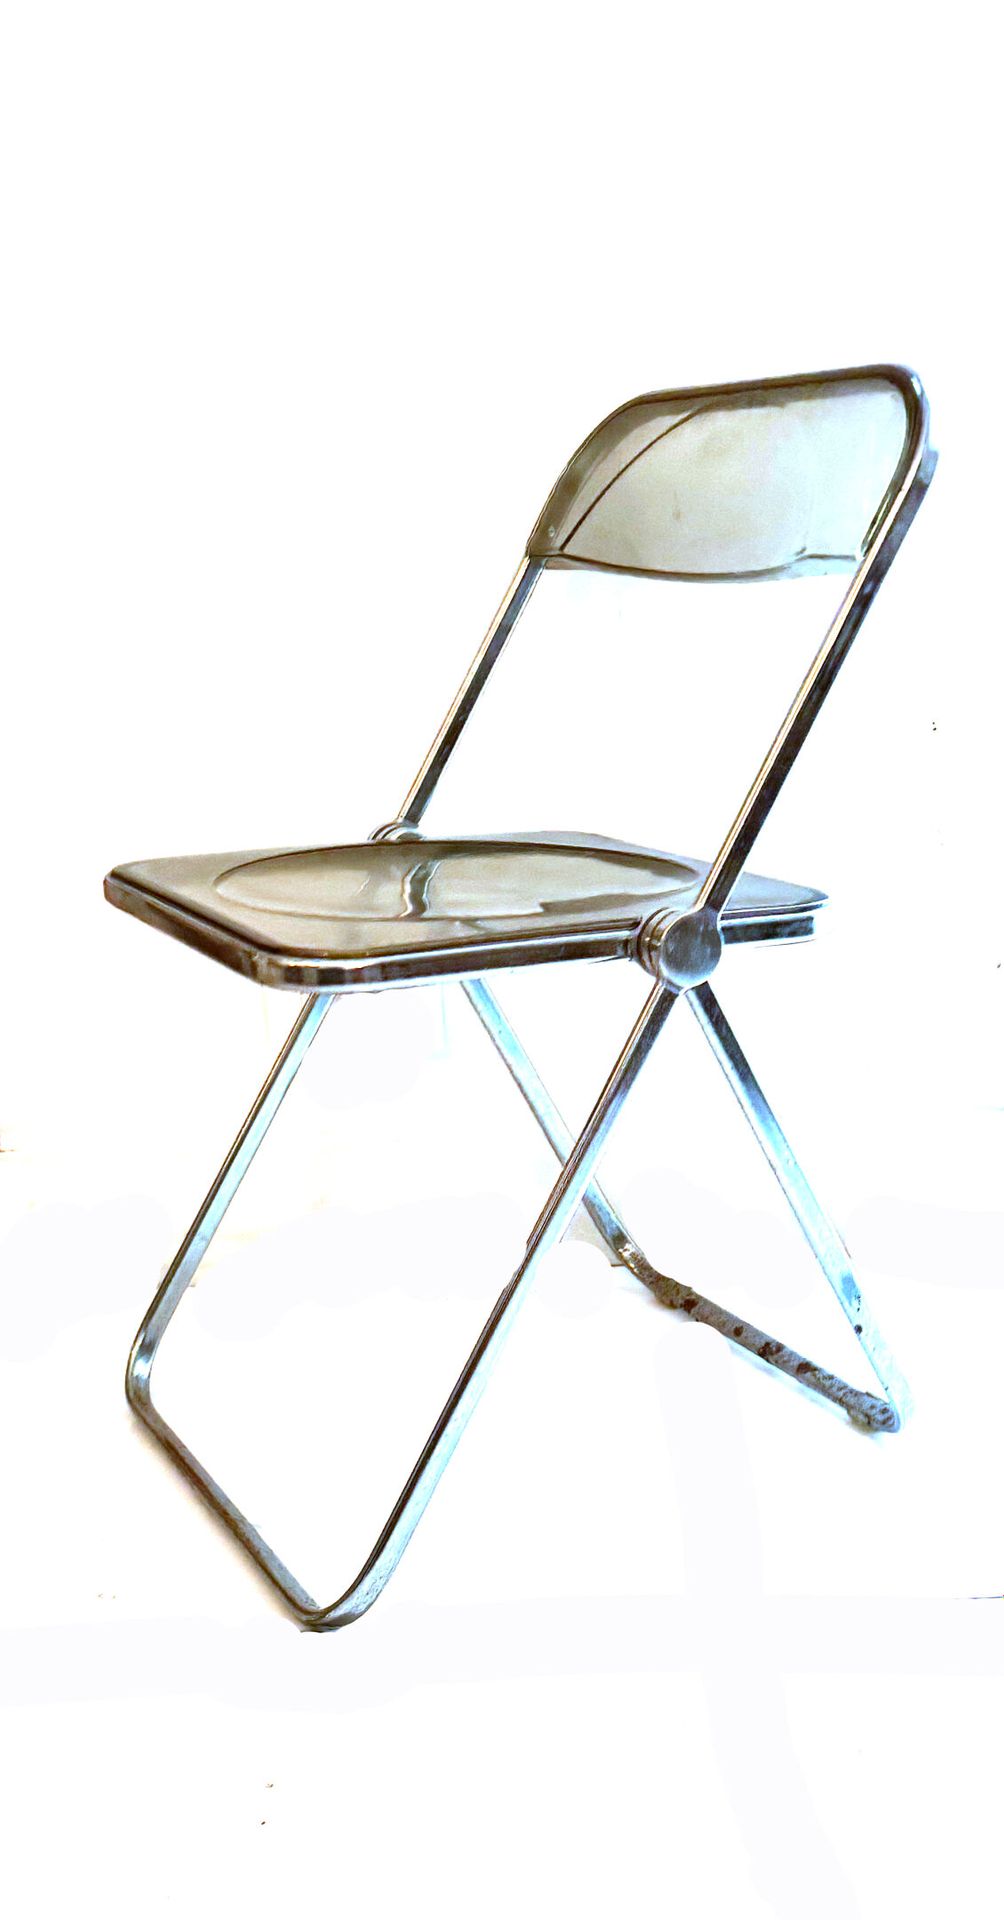 GIANCARLO PIRETTI (NE EN 1940) GIANCARLO PIRETTI (B. 1940)
Pair of "Plia" chairs&hellip;